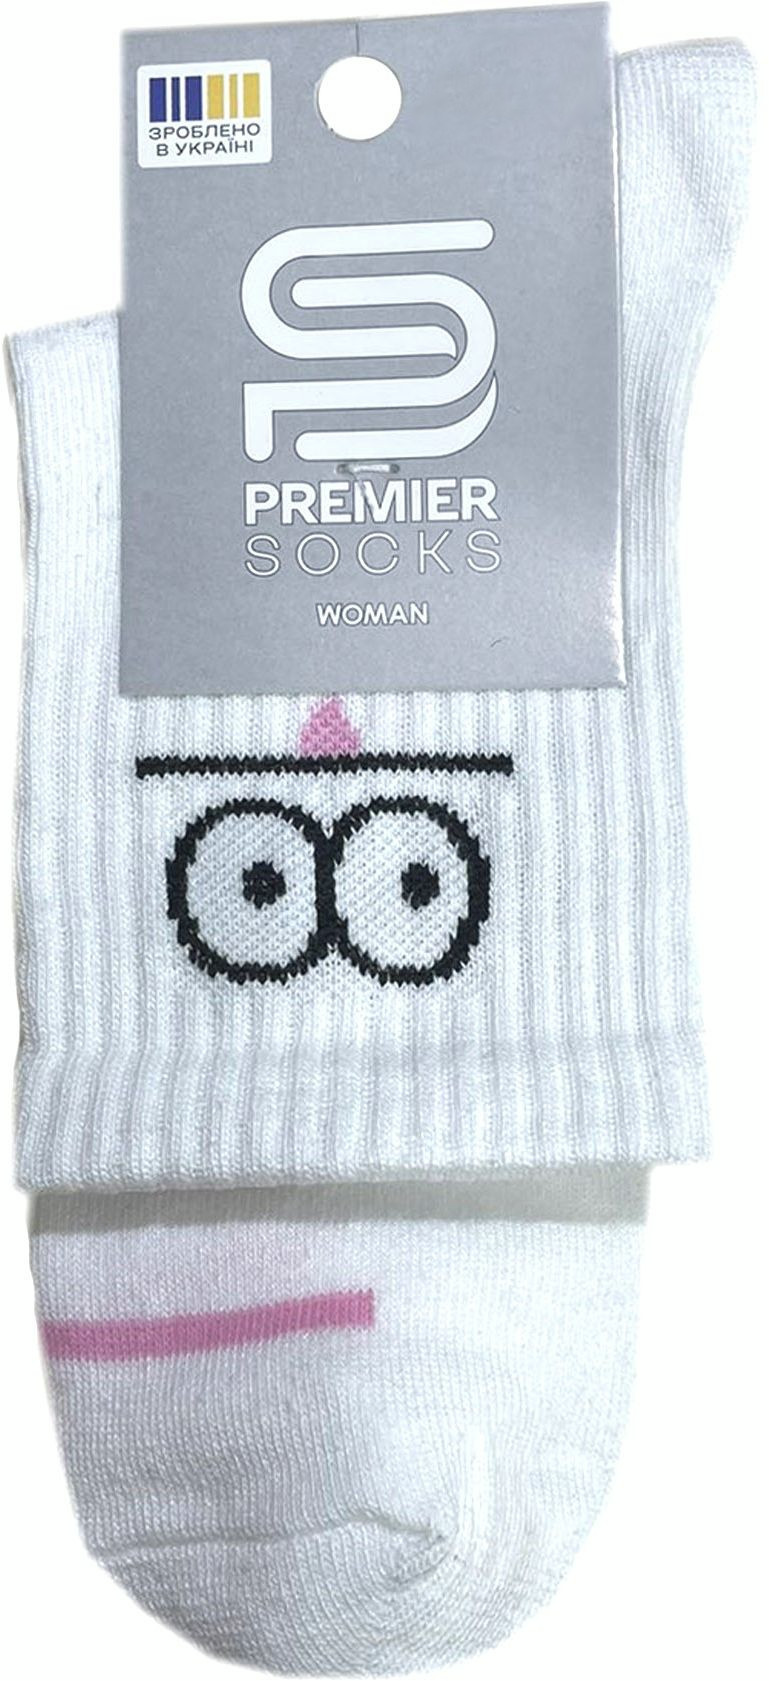 Носки женские Premier Socks 36-40 1 пара белые с принтом Смайл (4820163319056) фото 2